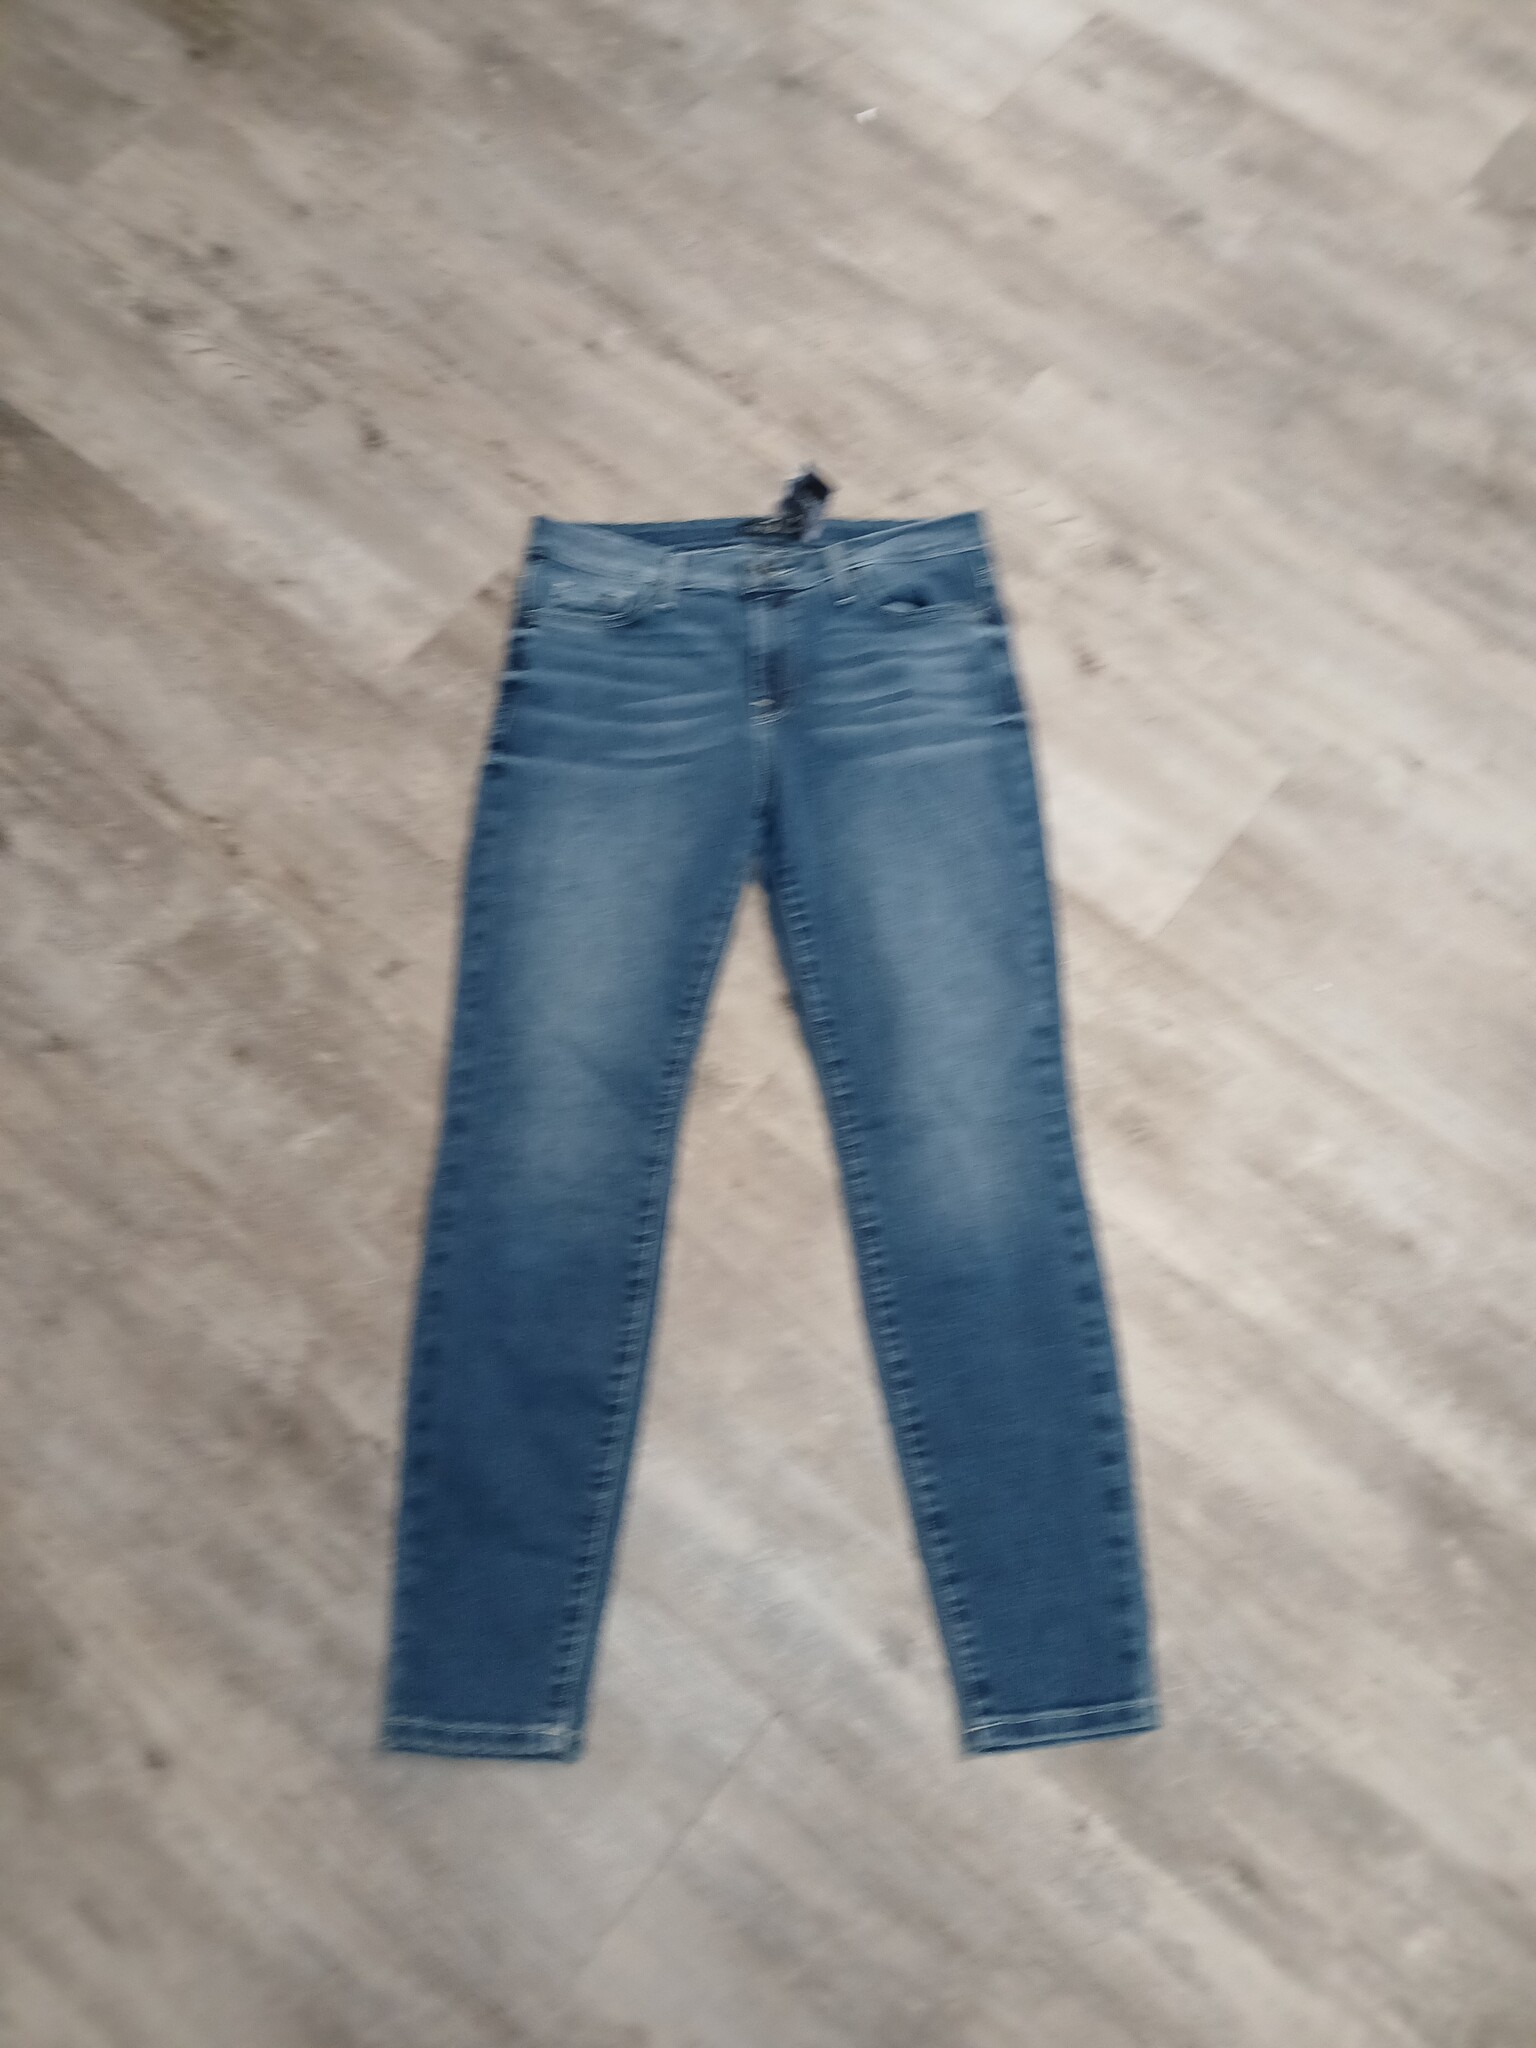 Medium Wash Jeans Size 30